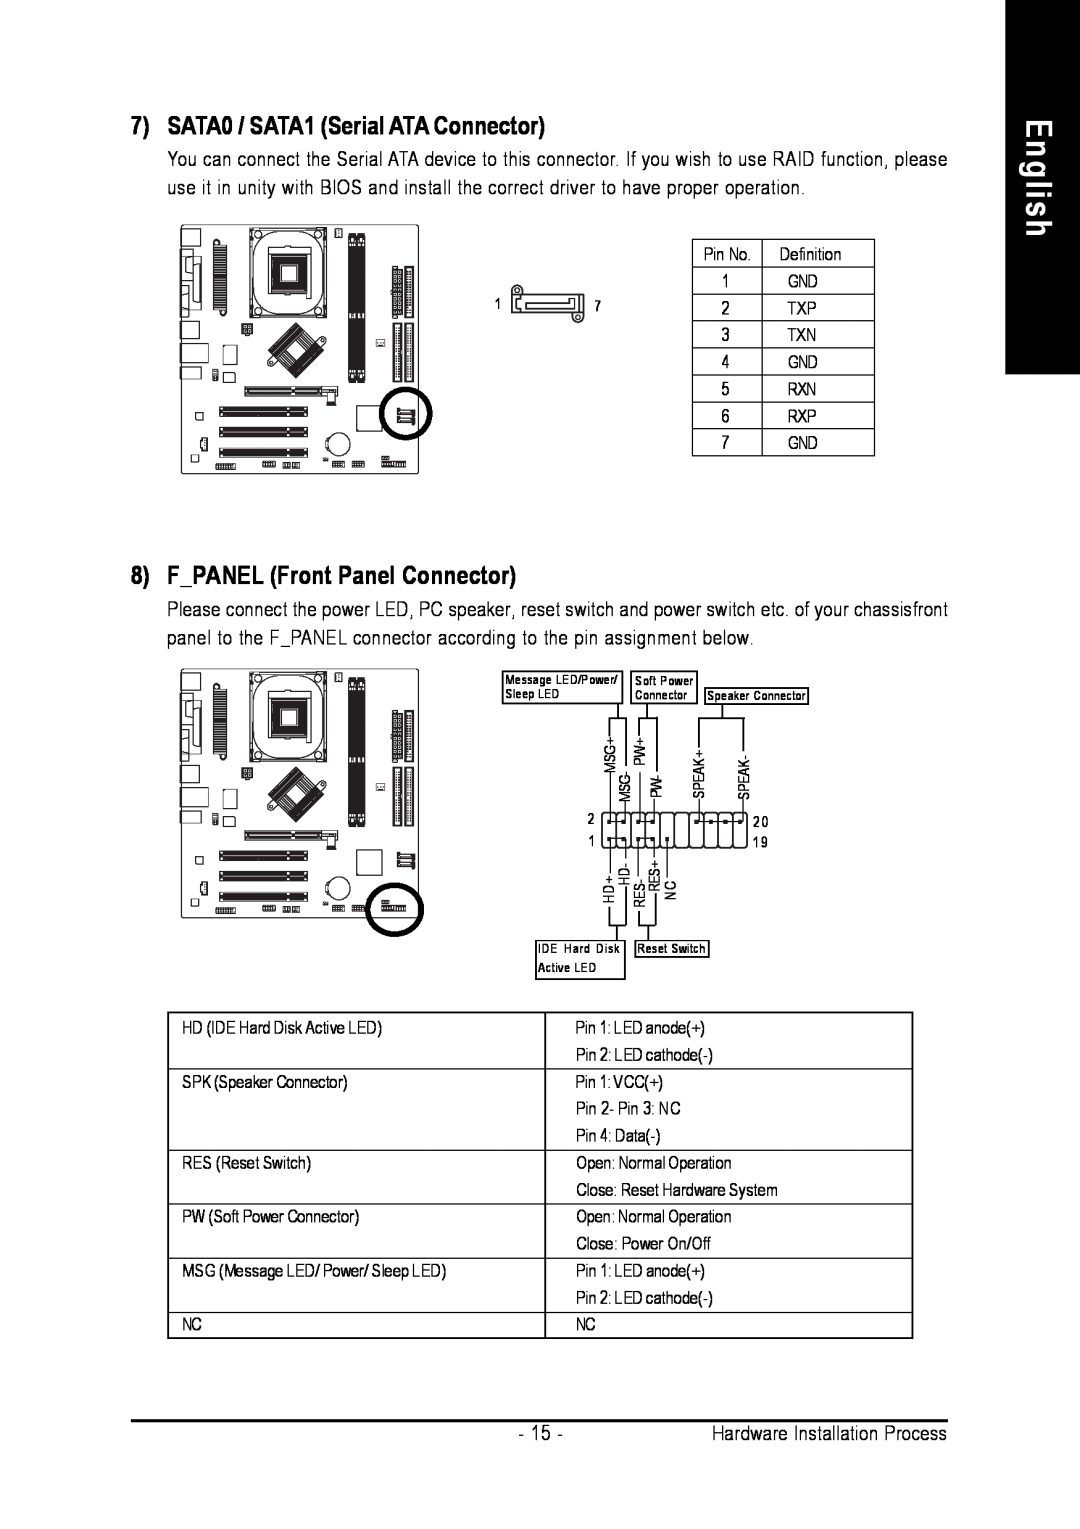 Intel 8VM800M-RZ user manual English, SATA0 / SATA1 Serial ATA Connector, F PANEL Front Panel Connector 